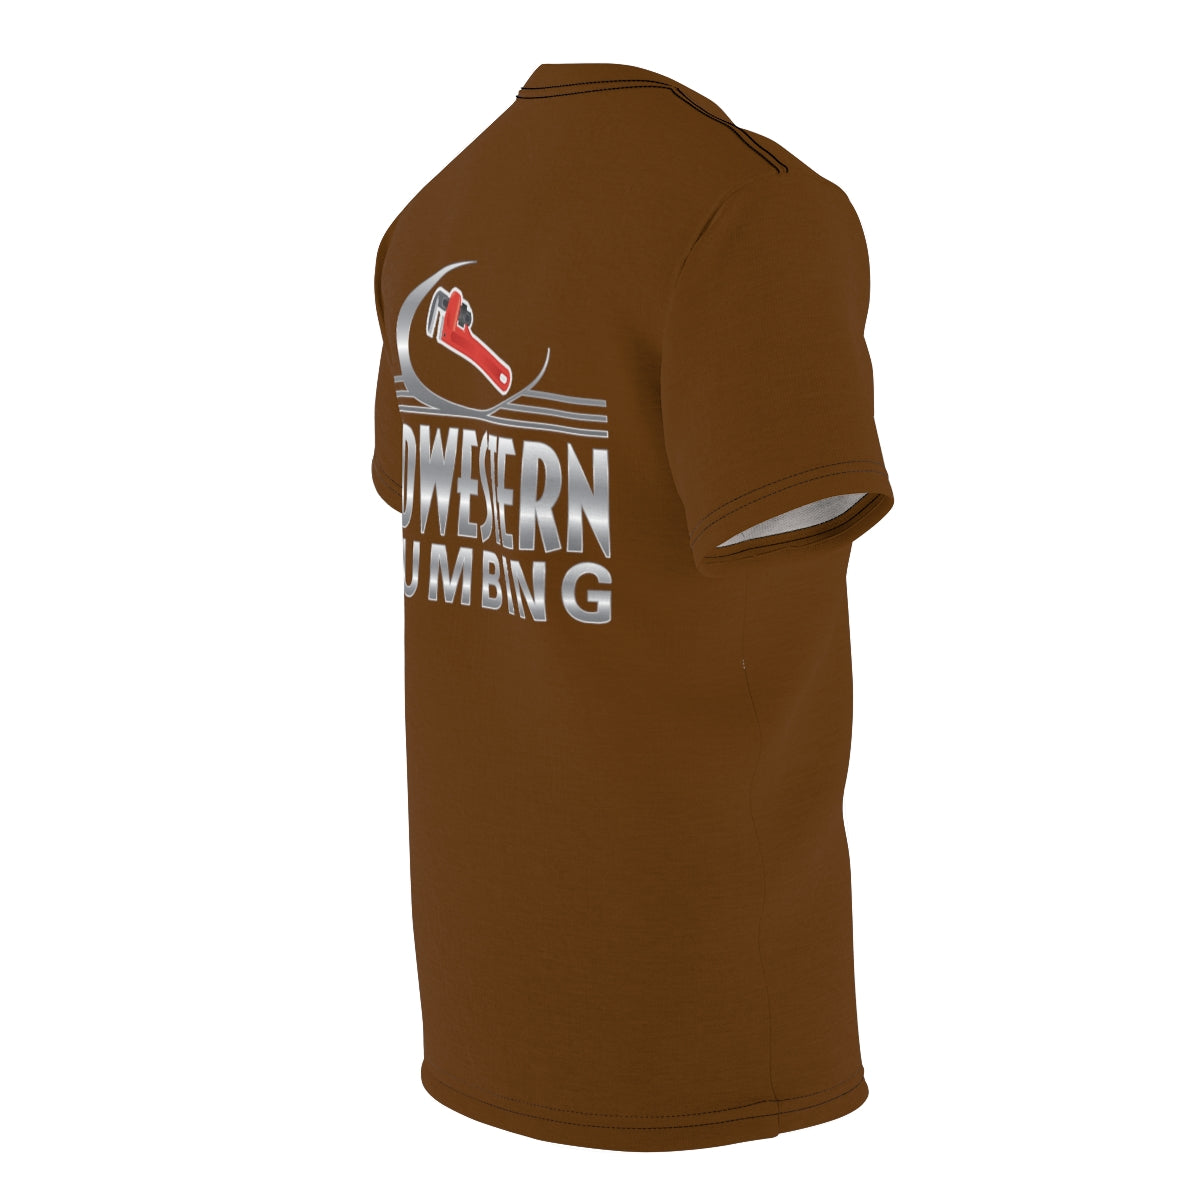 Camisa de trabajo premium marrón Midwestern Plumbing